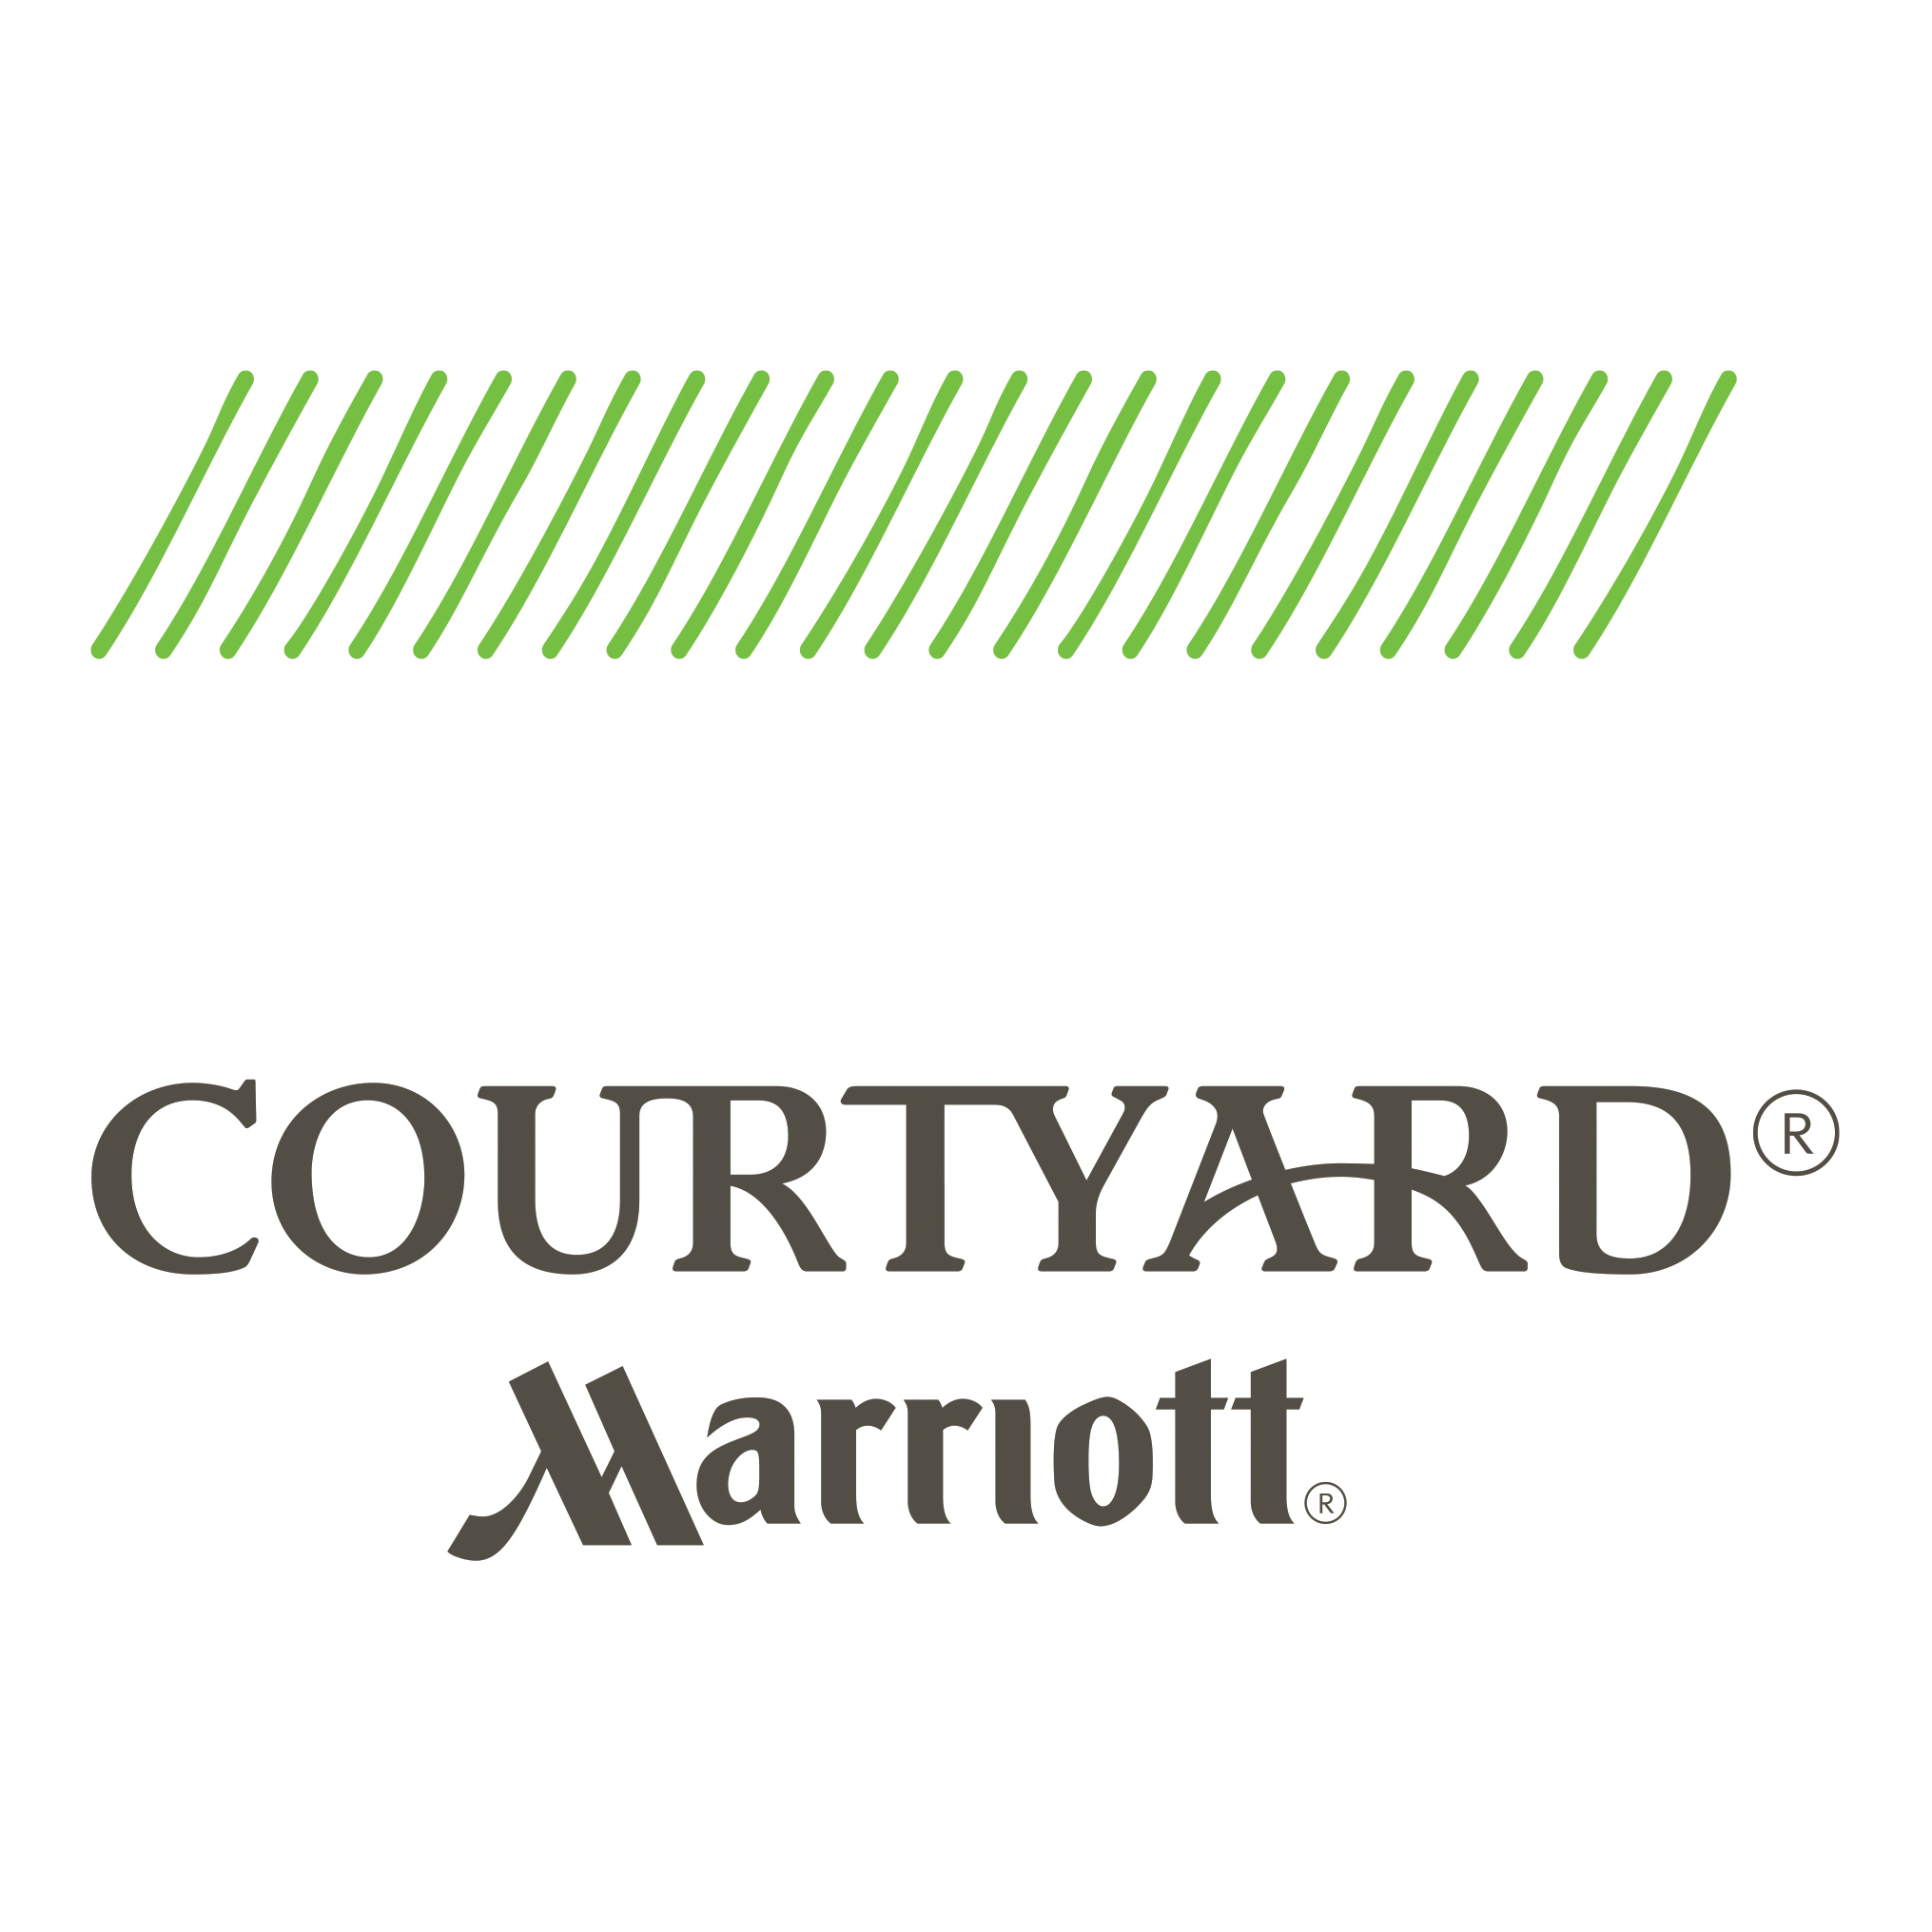 Courtyard by Marriott Cincinnati Covington Logo